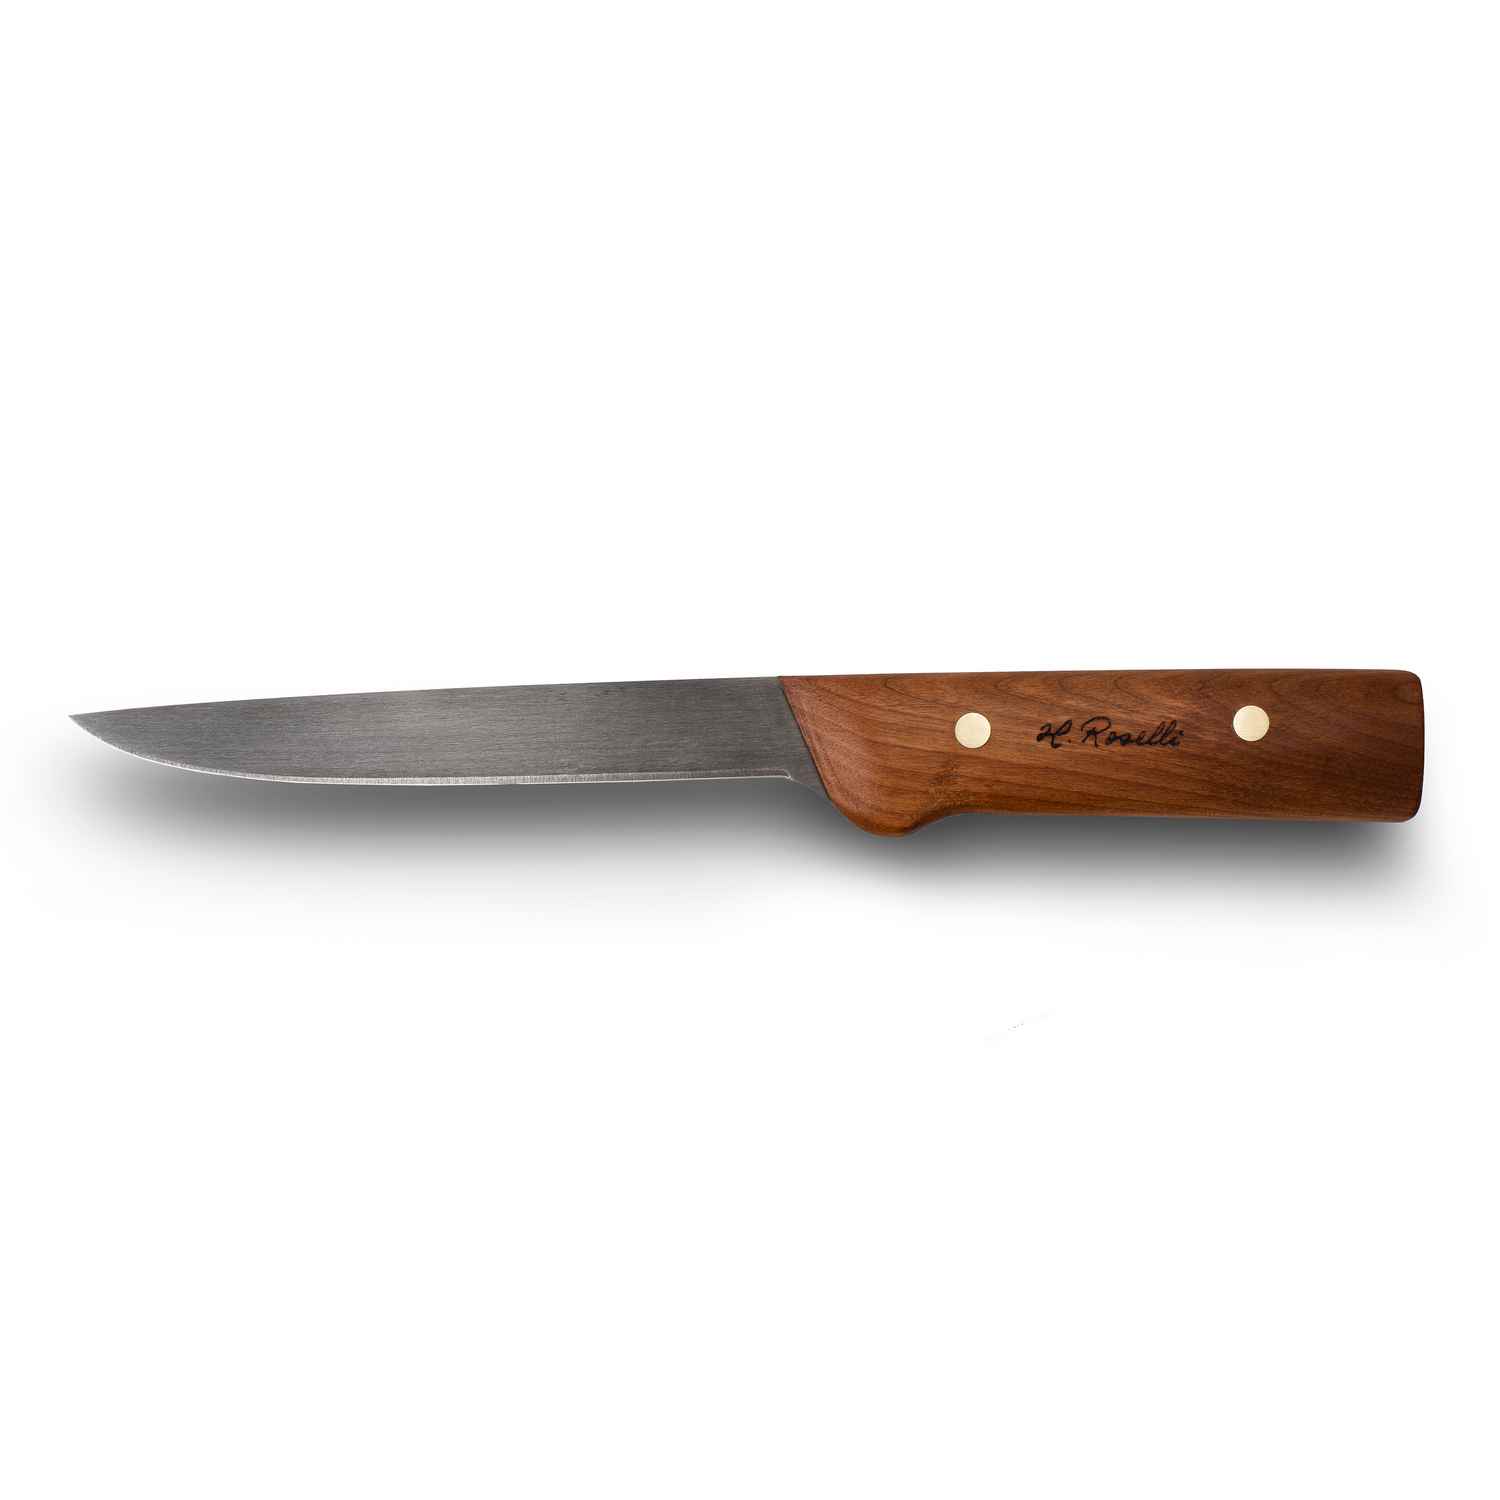 Roselli RW757 "Fillet Knife"